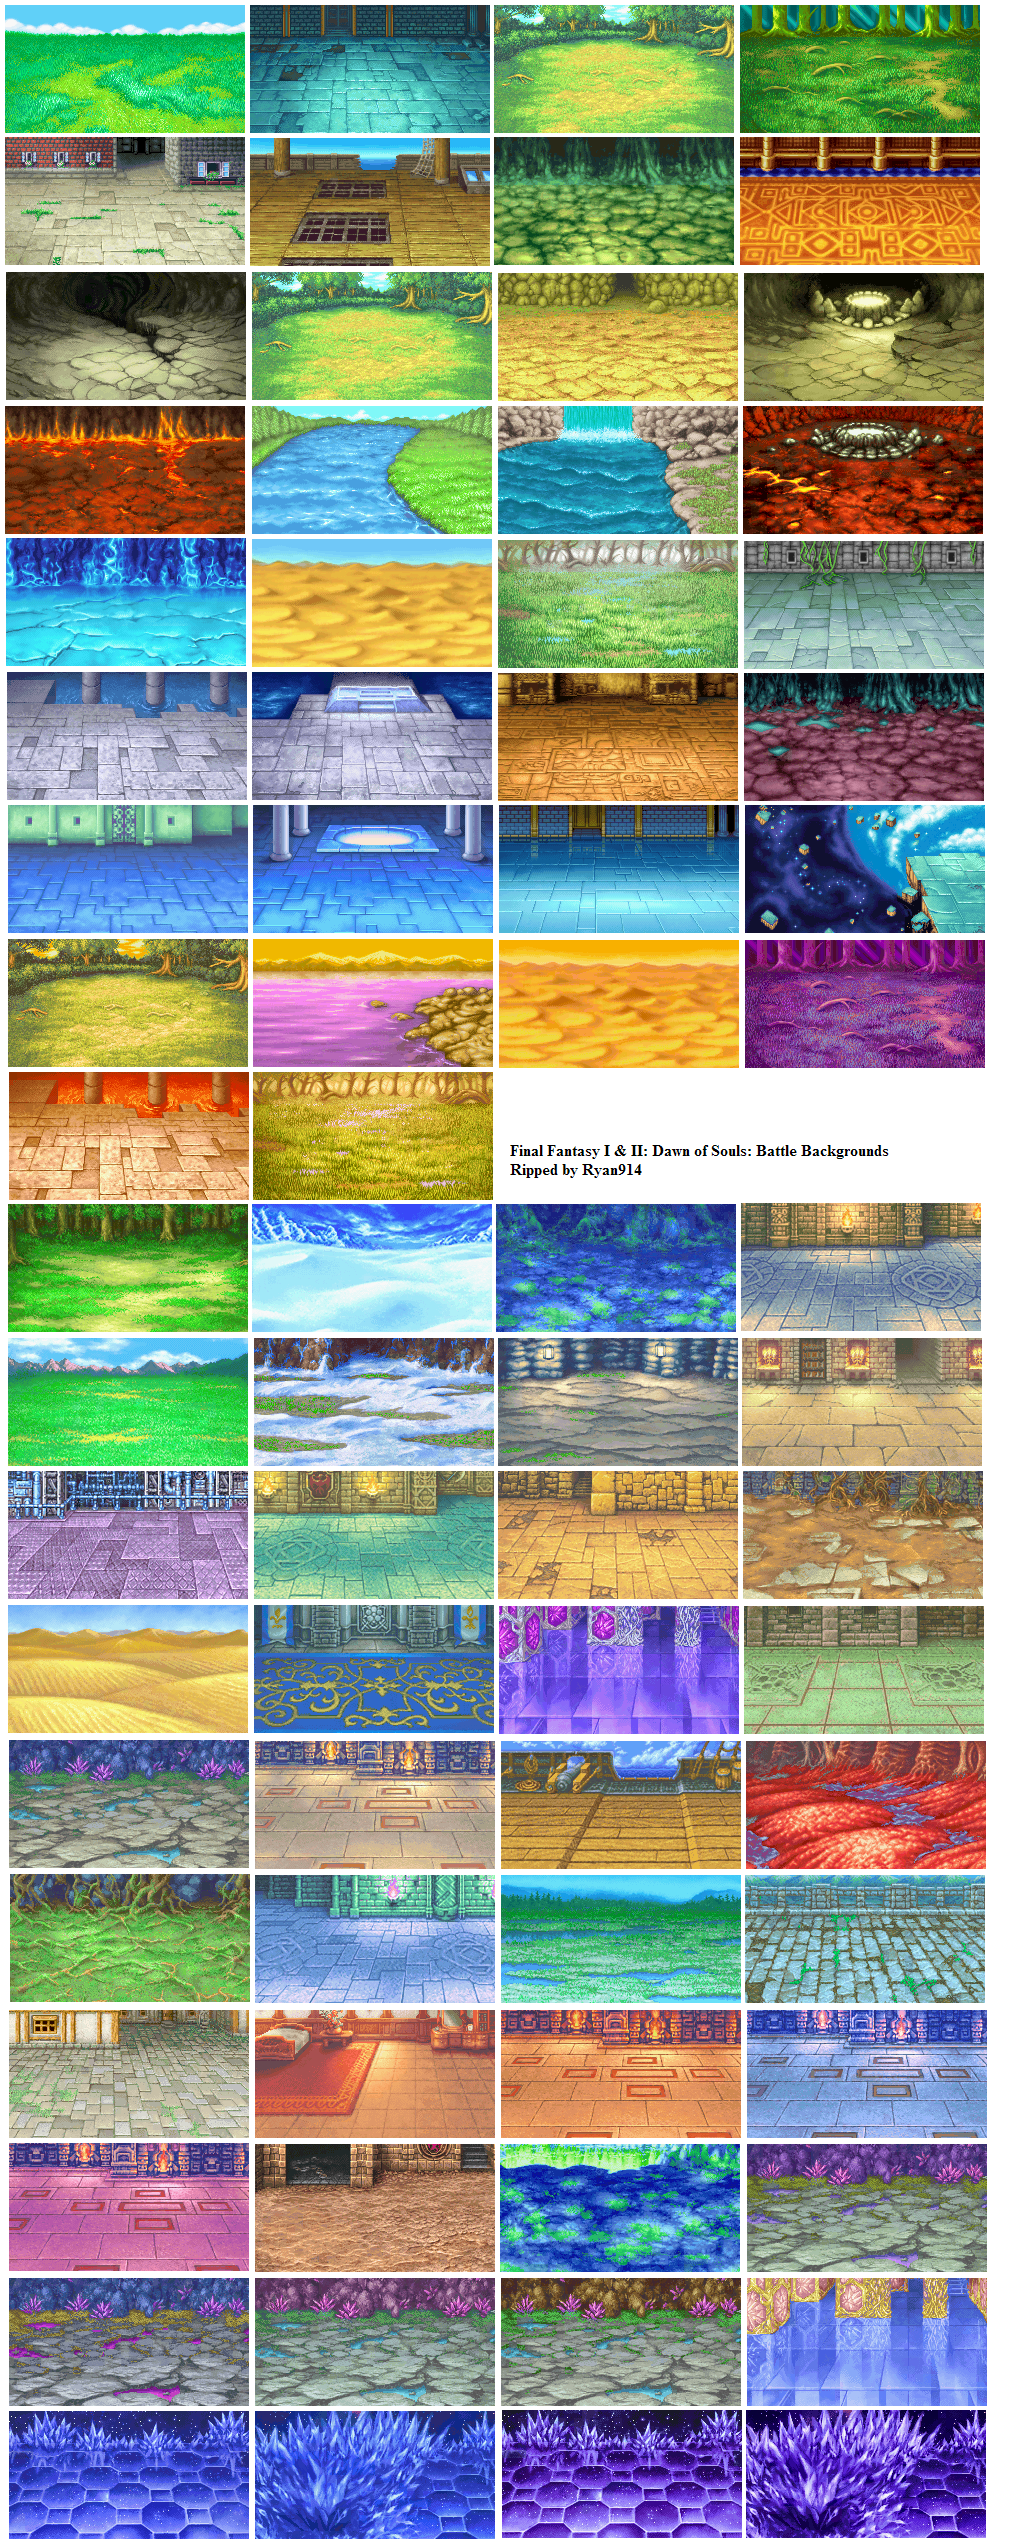 Final Fantasy 2: Dawn of Souls - Battle Backgrounds